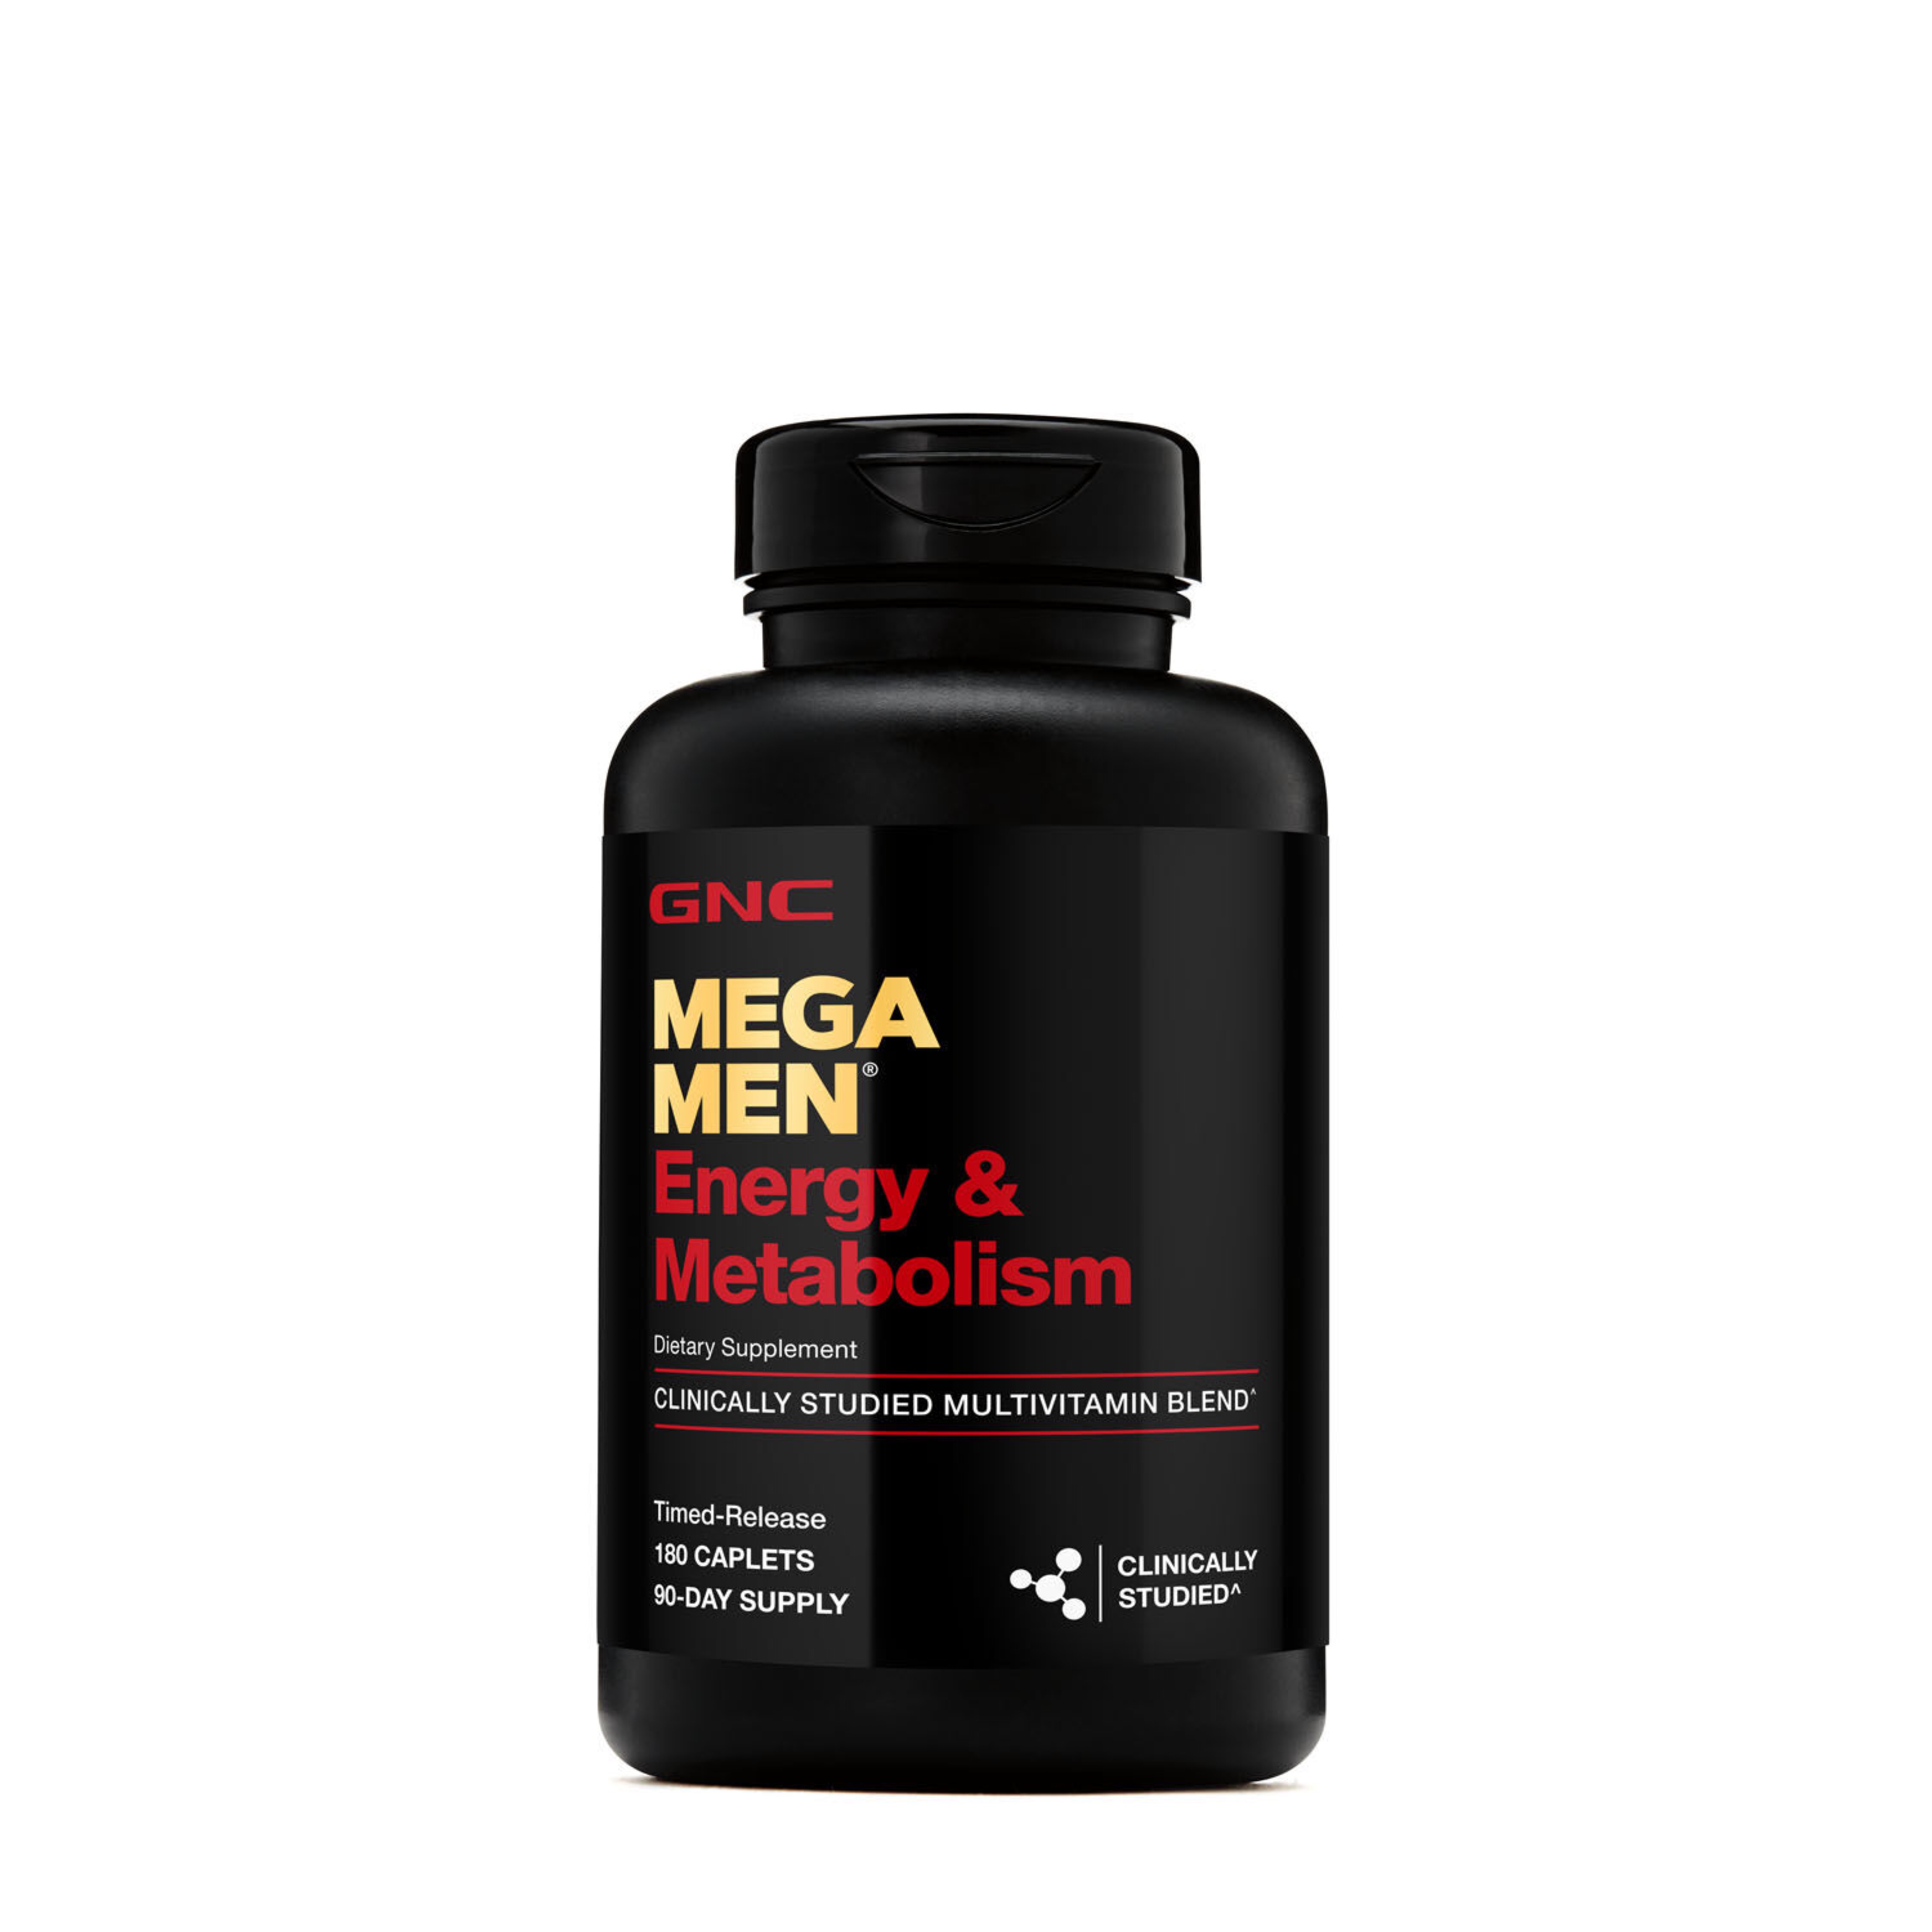 GNC MEGA MEN Energy & Metabolism Multivitamin – 180 Caplets